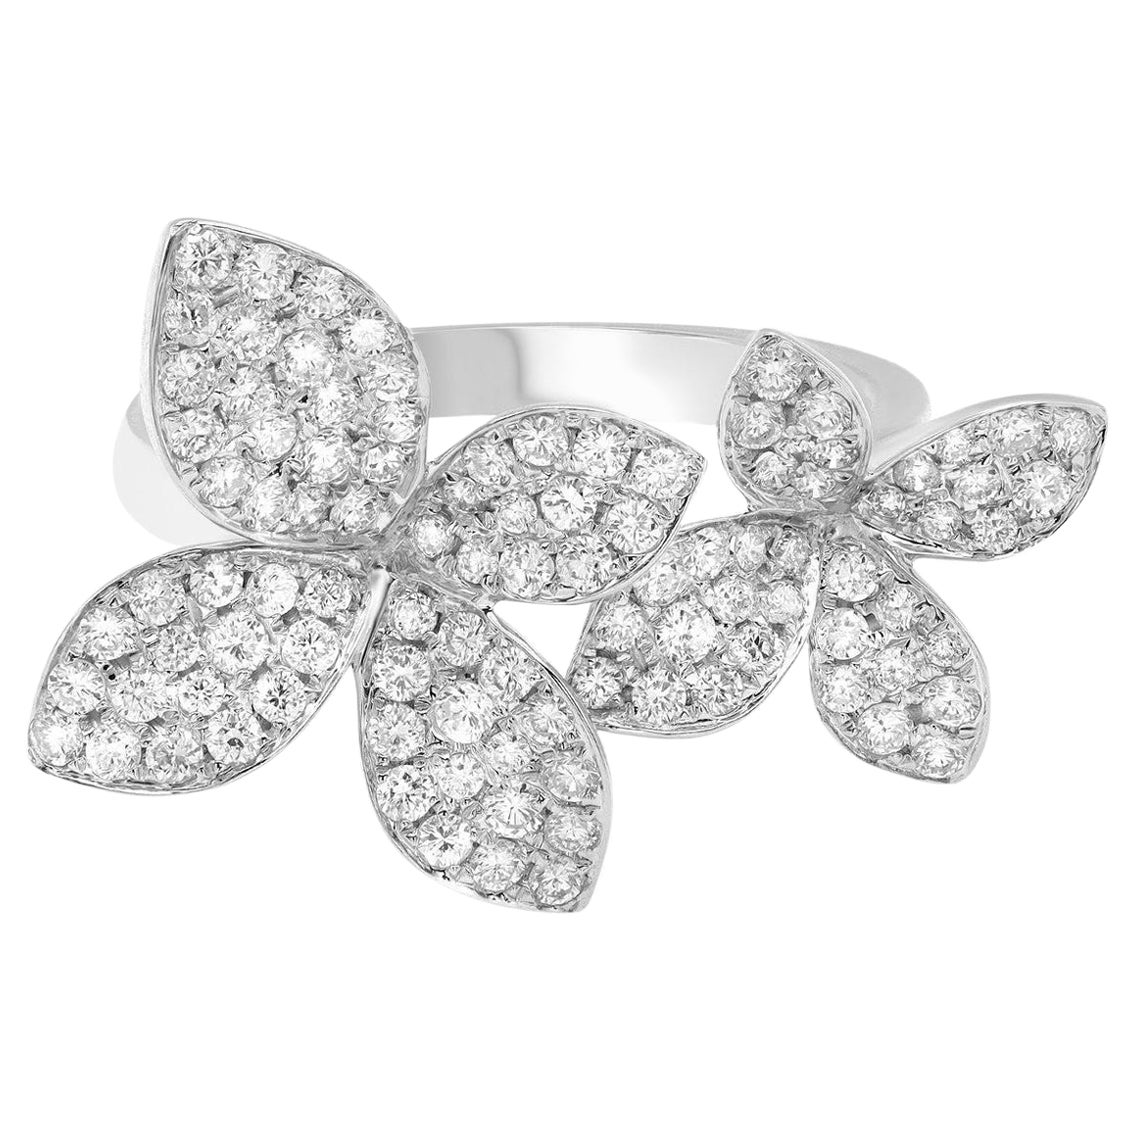 Elizabeth Fine Jewelry 0.97 Carat Diamond Double Flower Ring in 18K White Gold For Sale